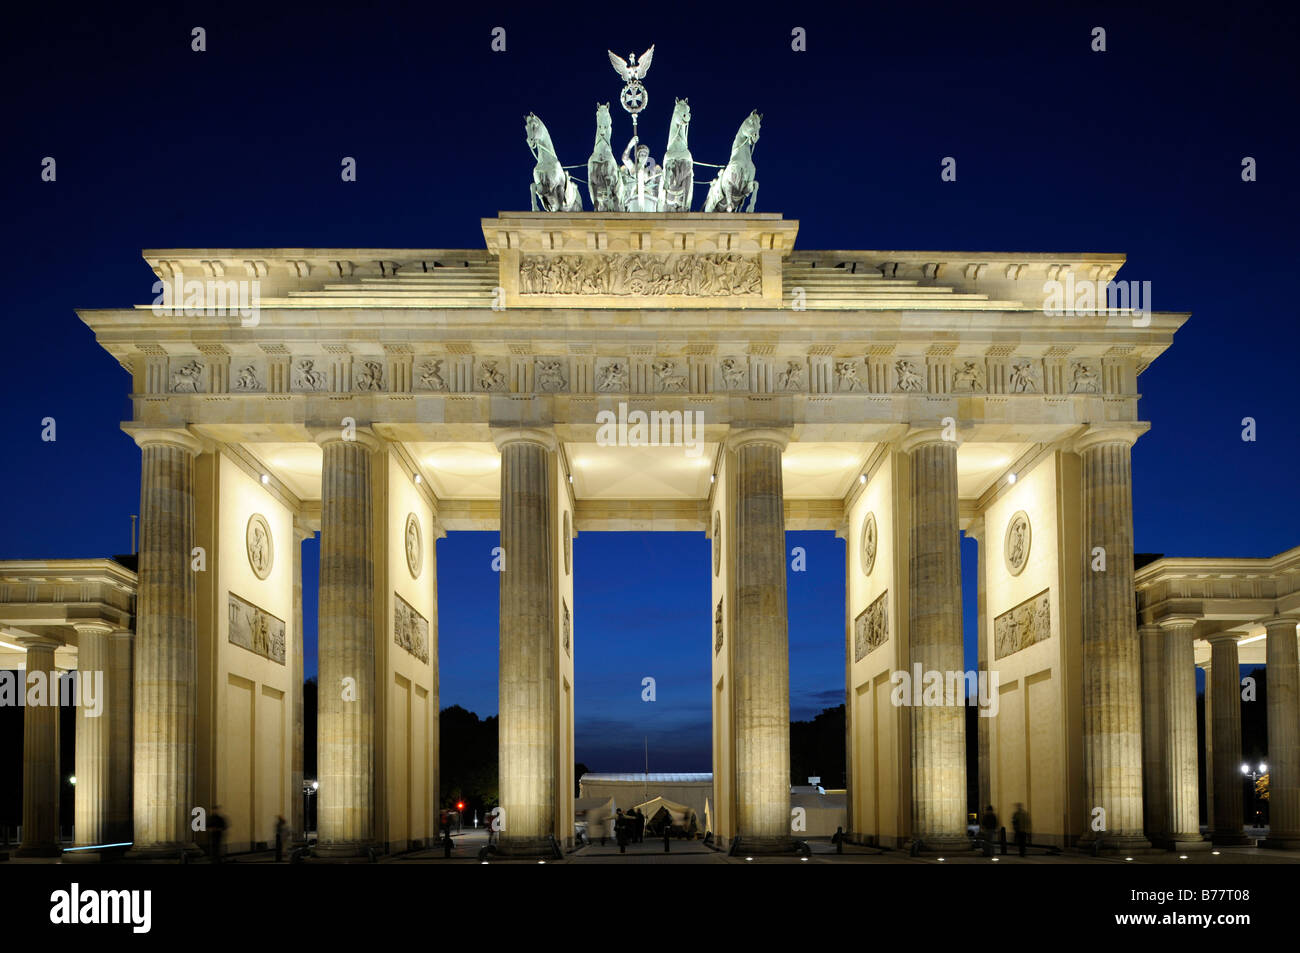 Brandenburger Tor or Brandenburg Gate, night photograph, floodlit, Berlin, Germany, Europe Stock Photo